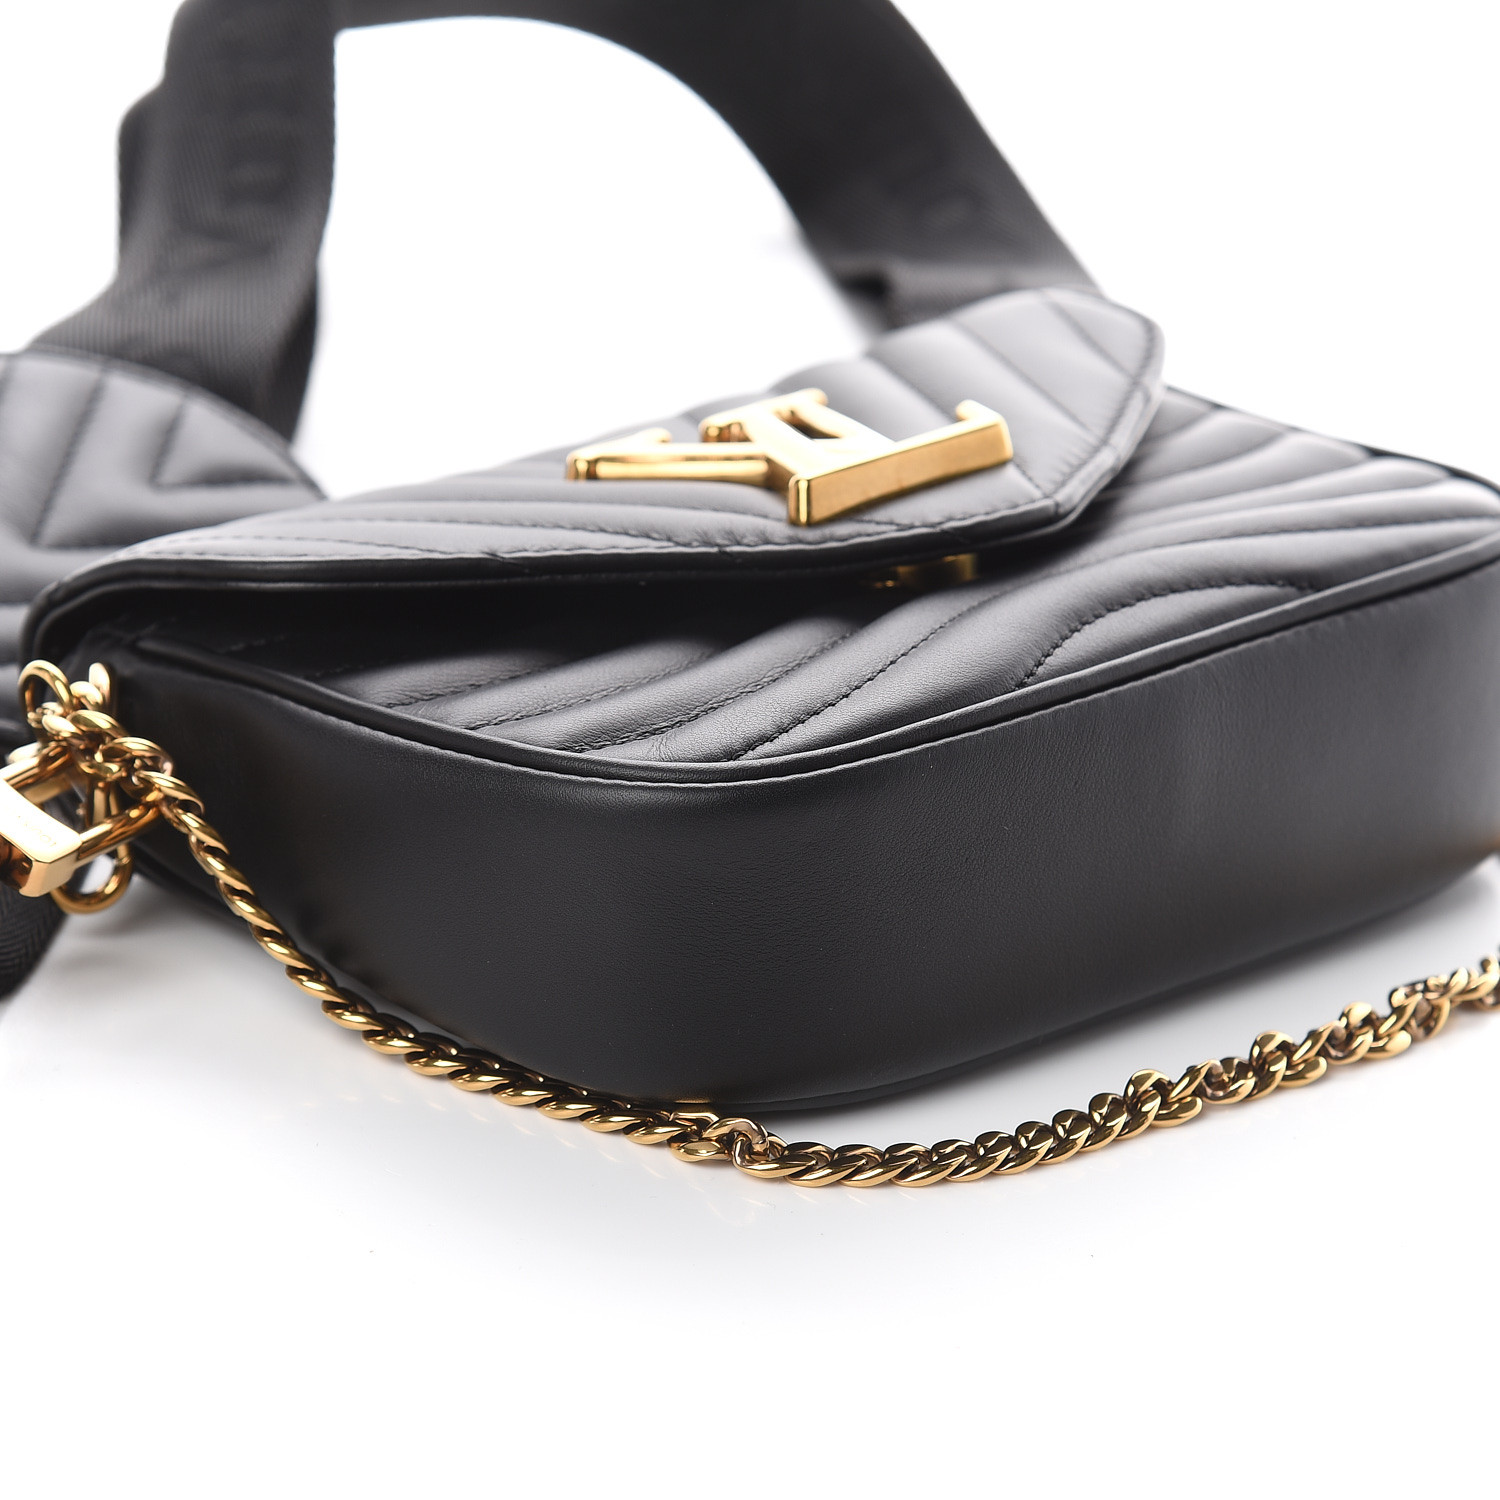 New Wave Multi-Pochette H24 - Women - Handbags